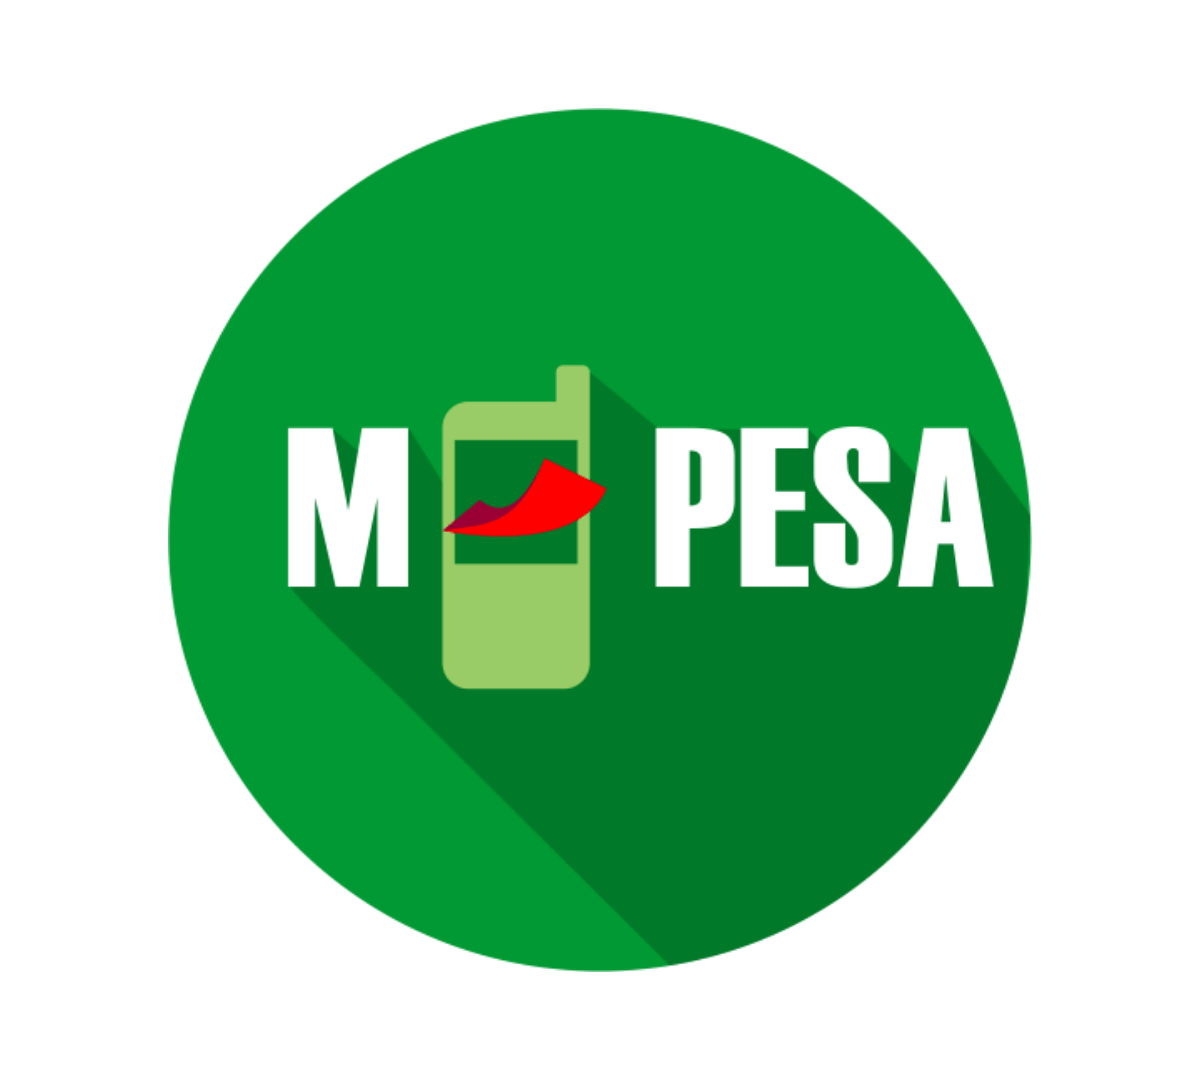 Safaricom Ethiopia M-PESA